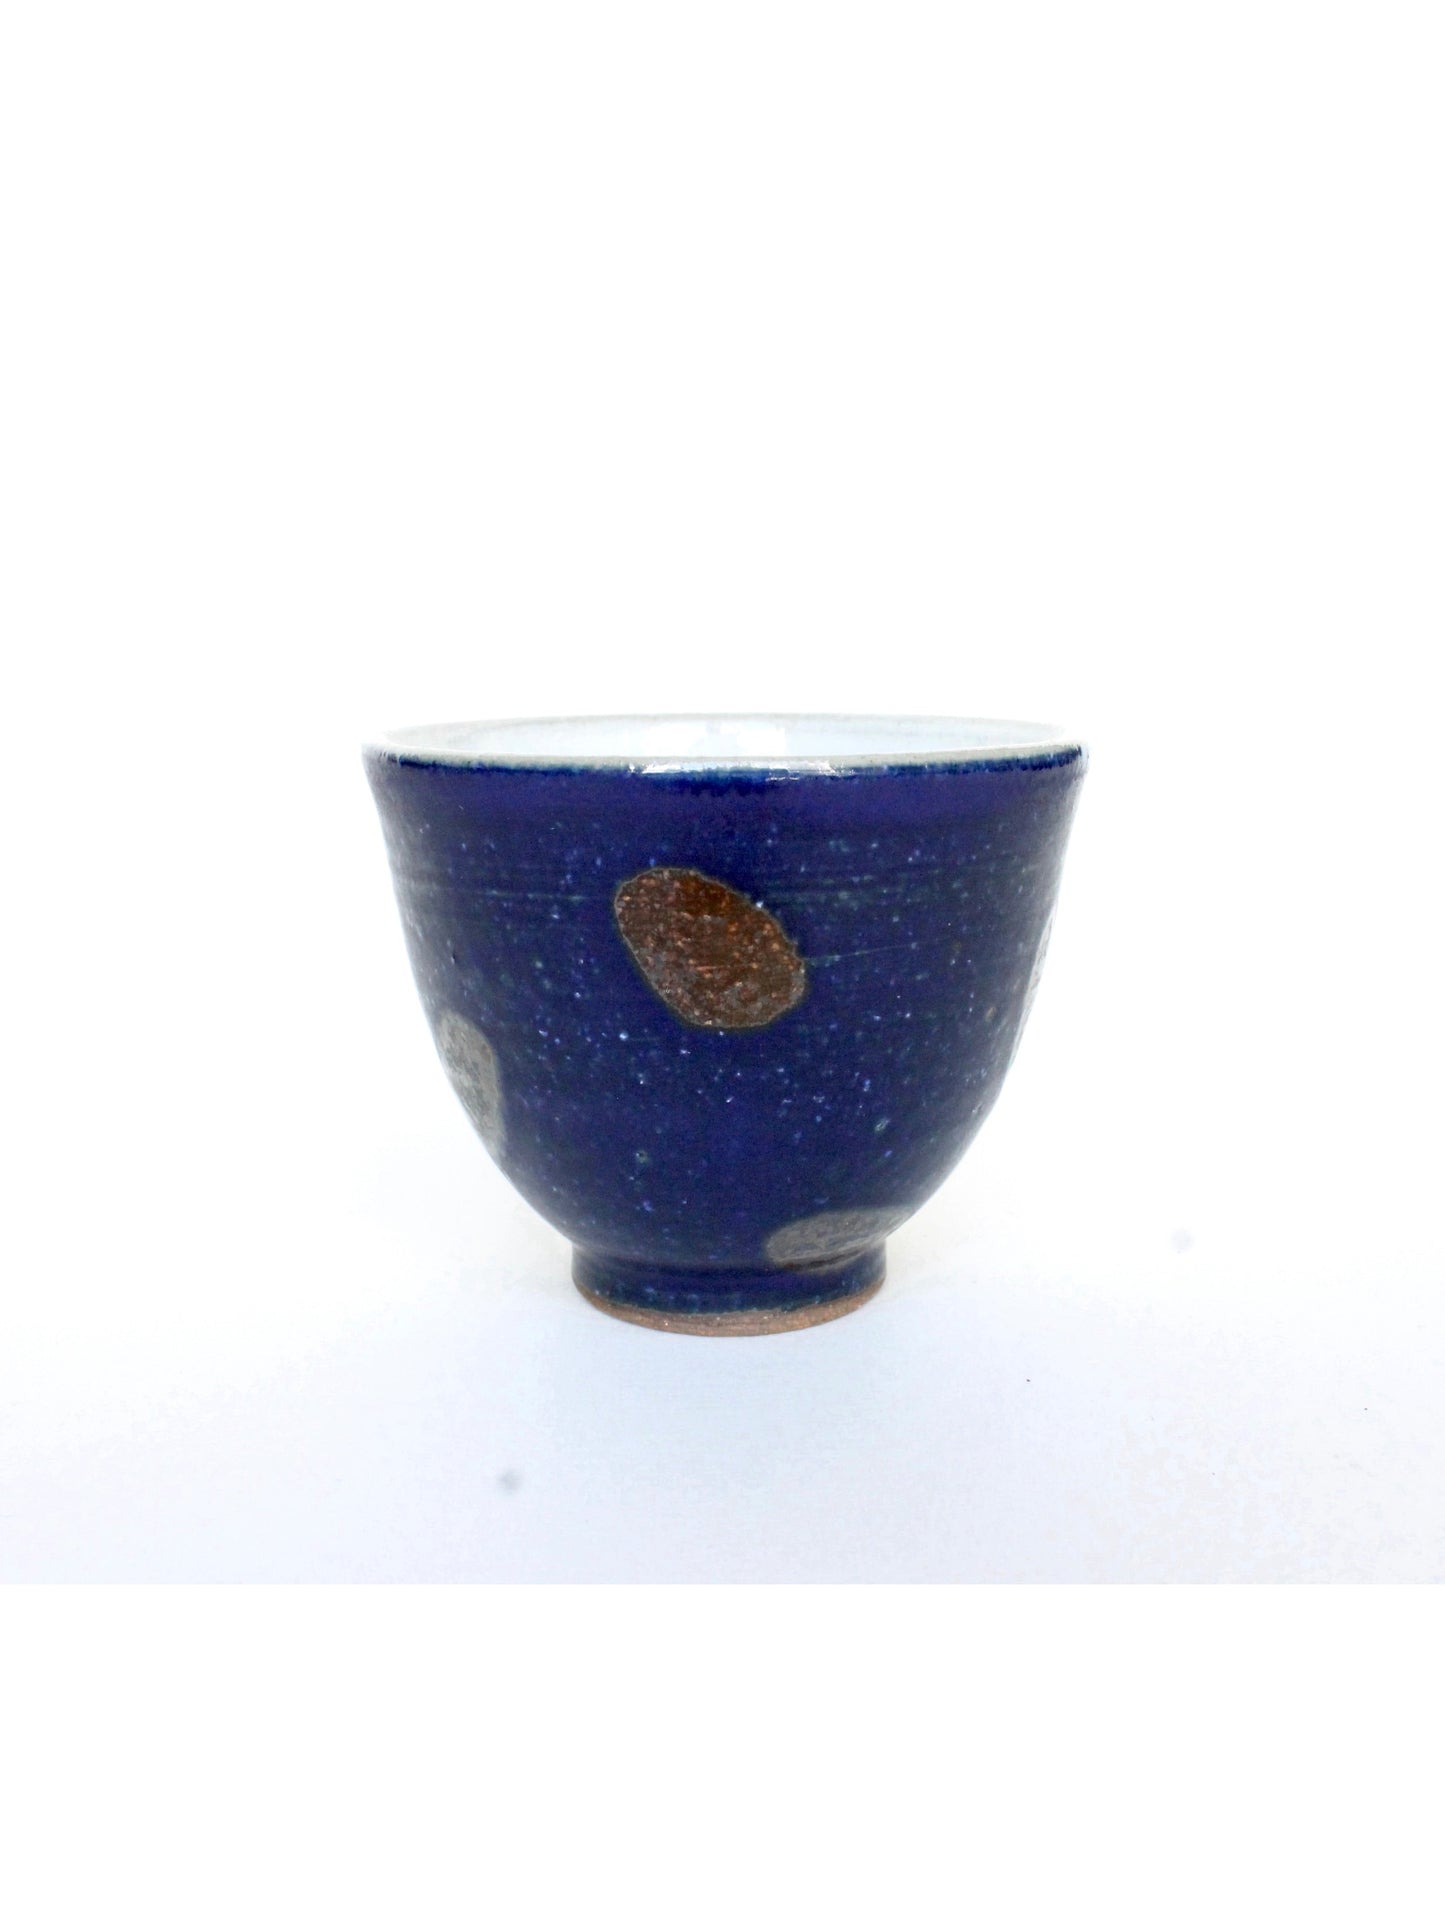 Terracotta cup / Kuramae "Gunjyo Ten"